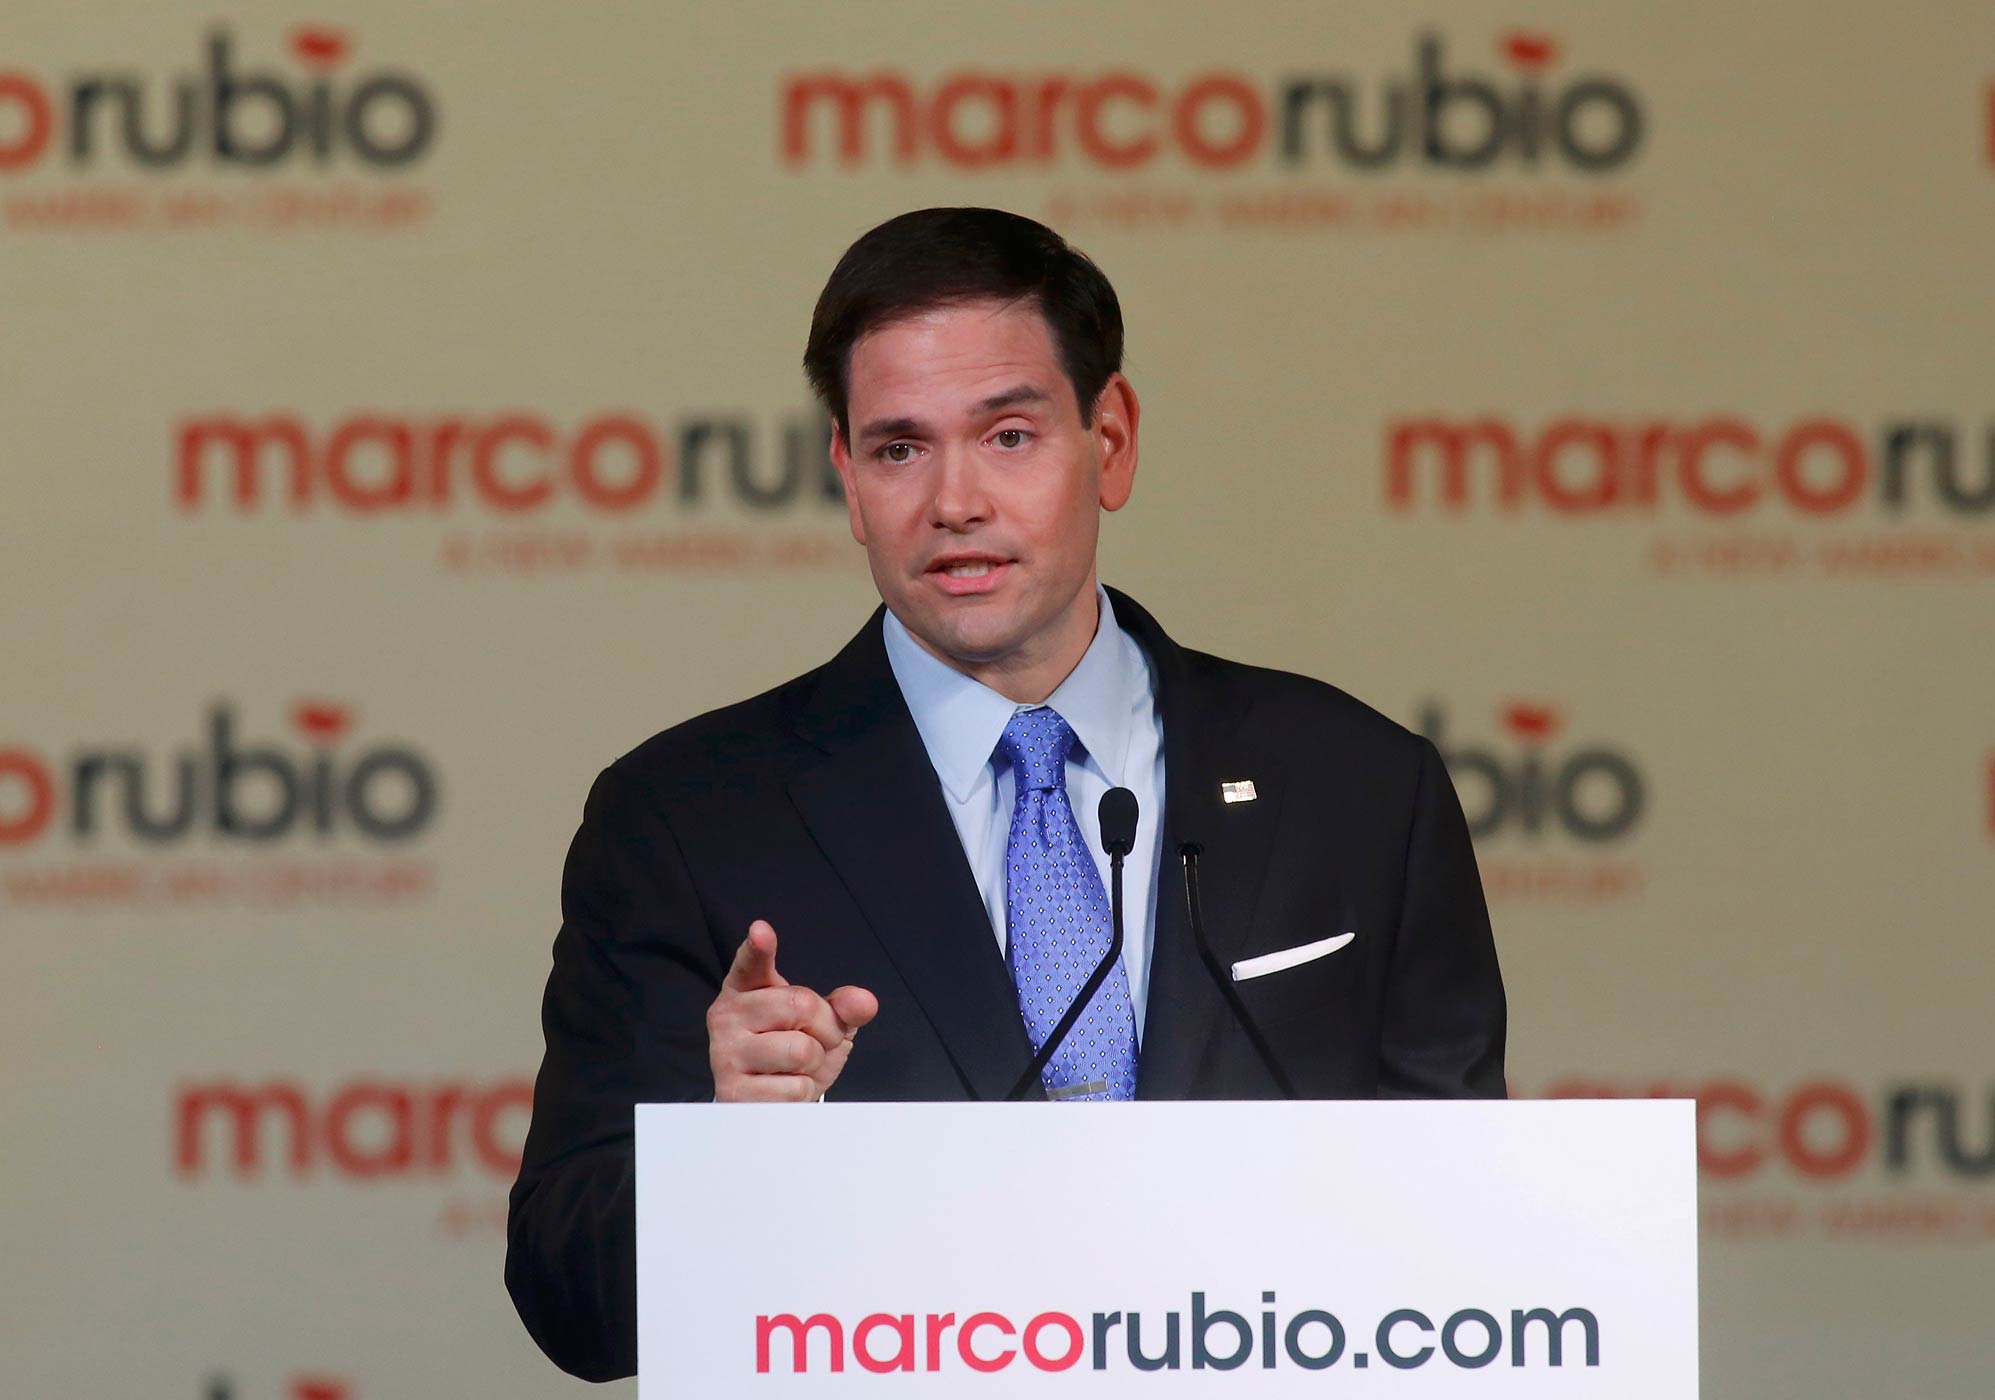 U.S. Senator Rubio announces bid for the Republican nomination in the 2016 U.S. presidential election race during speech in Miami